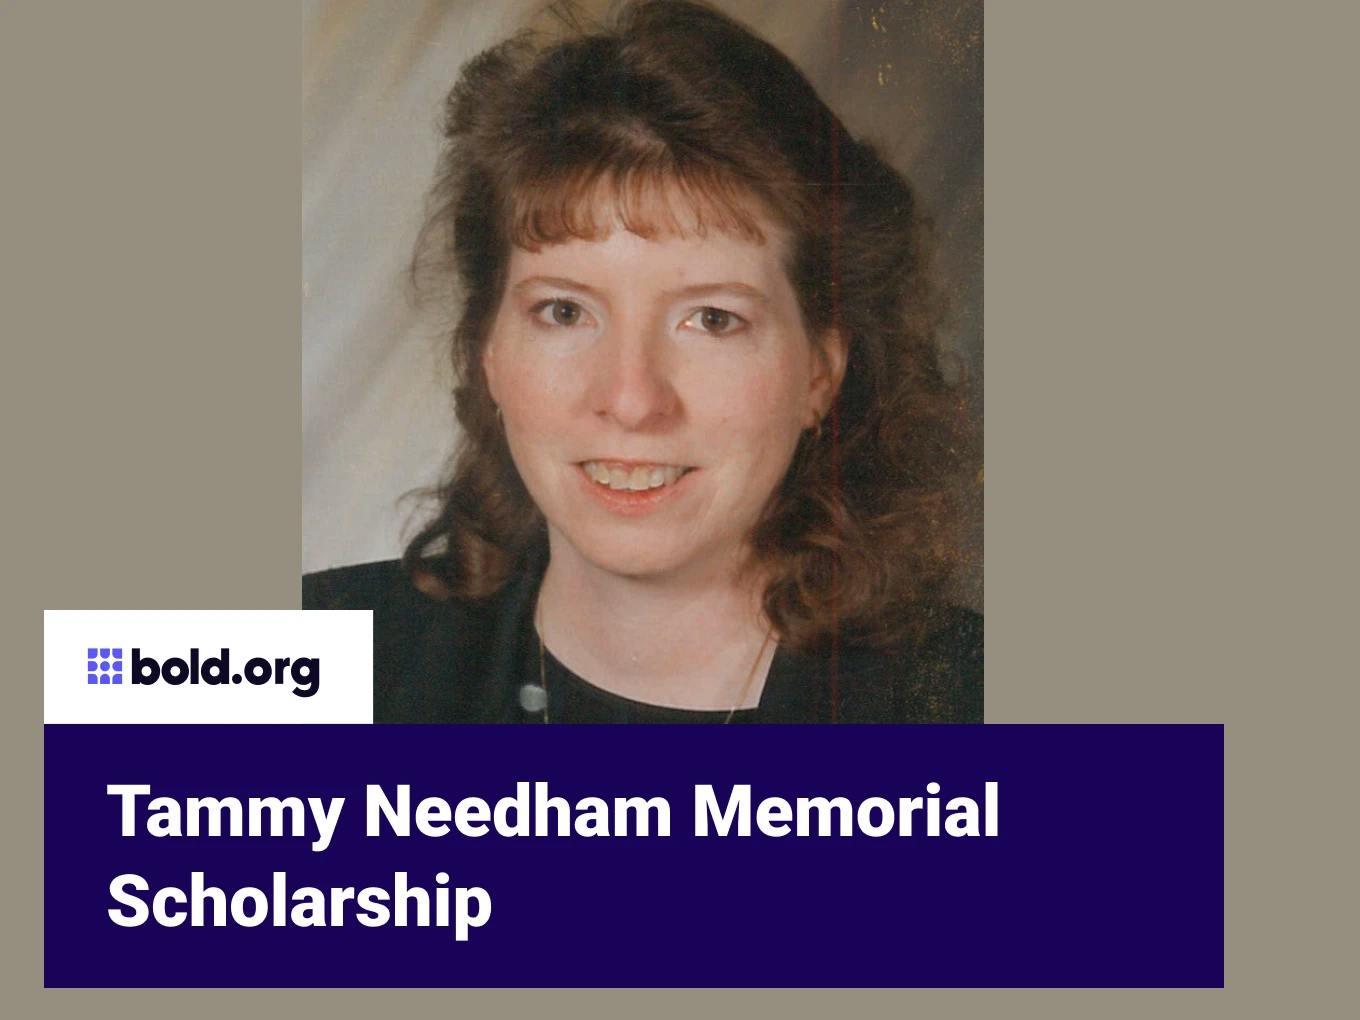 Tammy Needham Memorial Scholarship